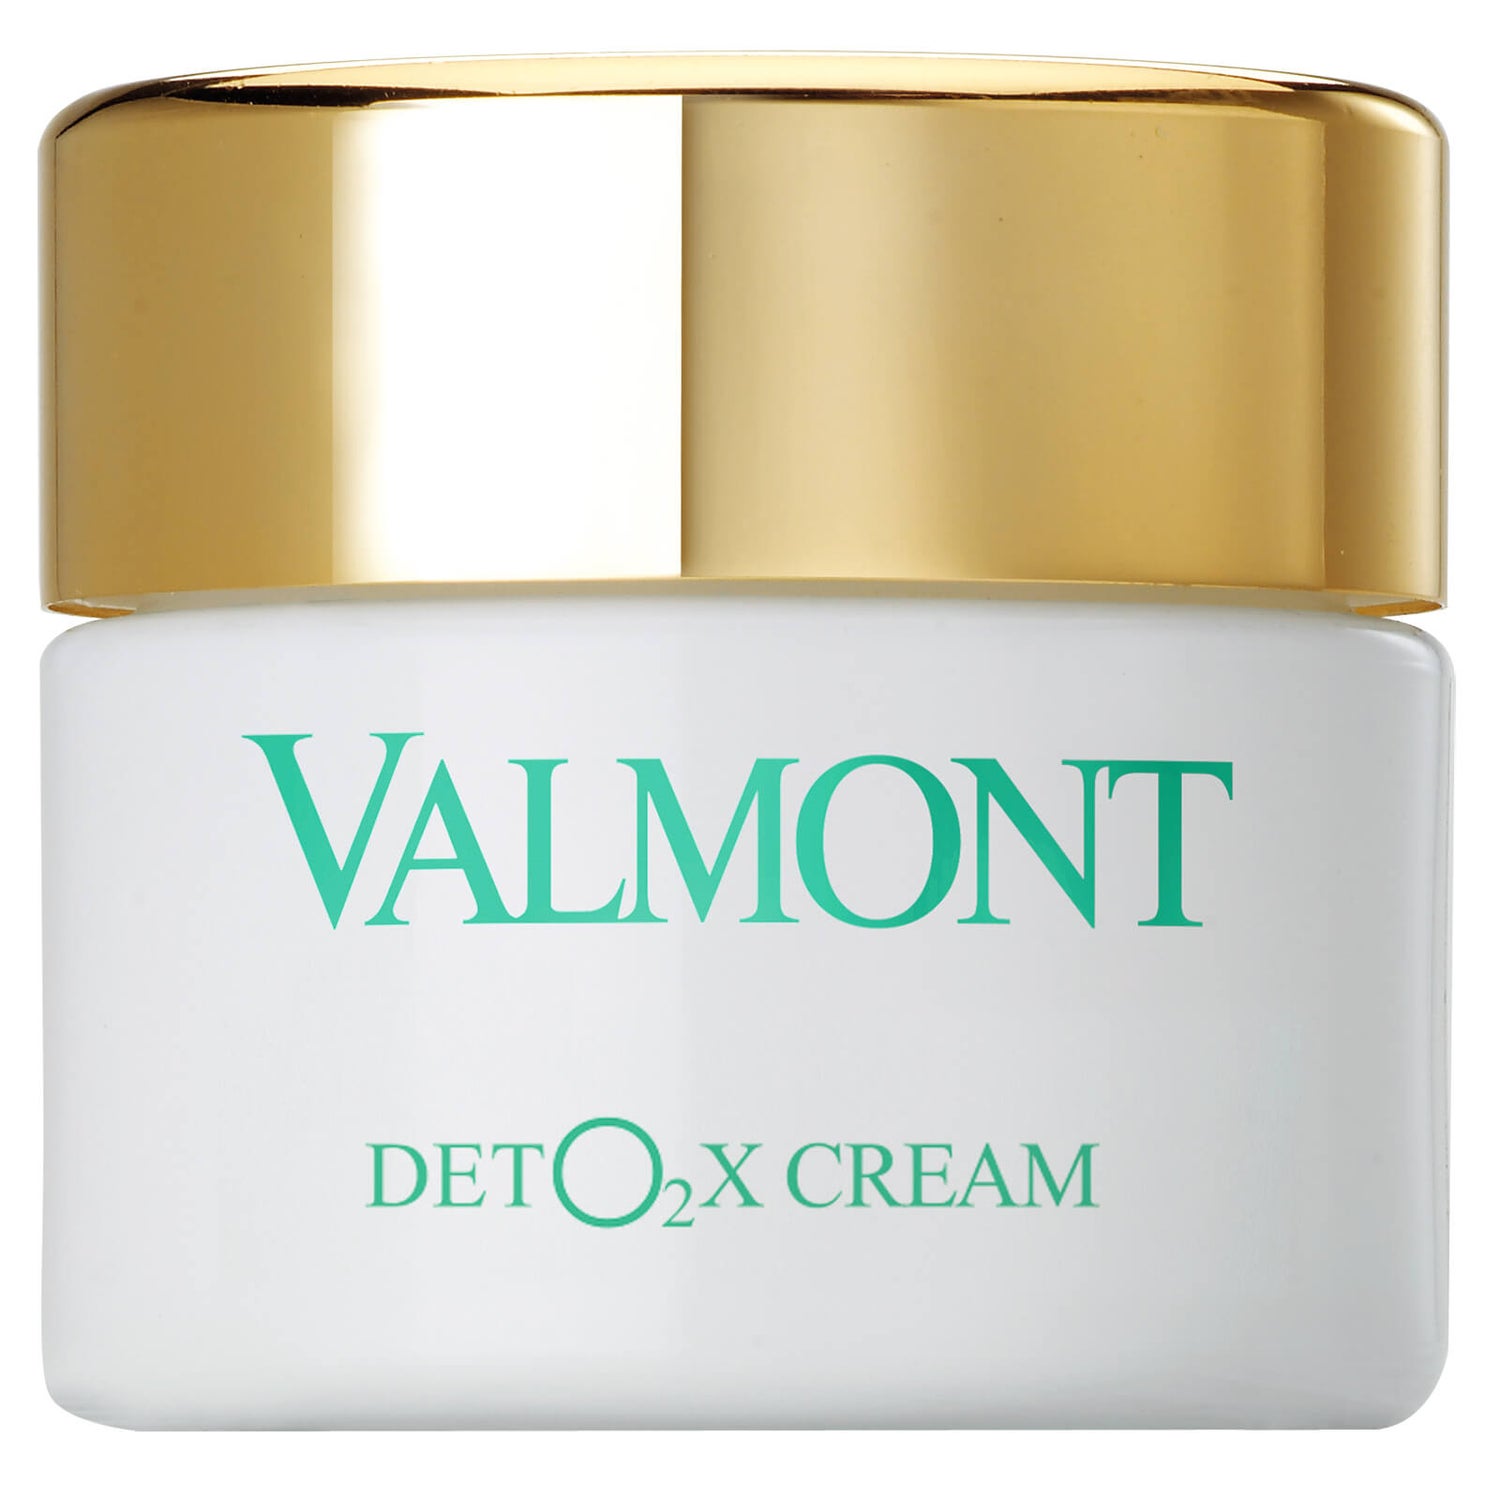 Valmont DETO2X Cream - LOOKFANTASTIC